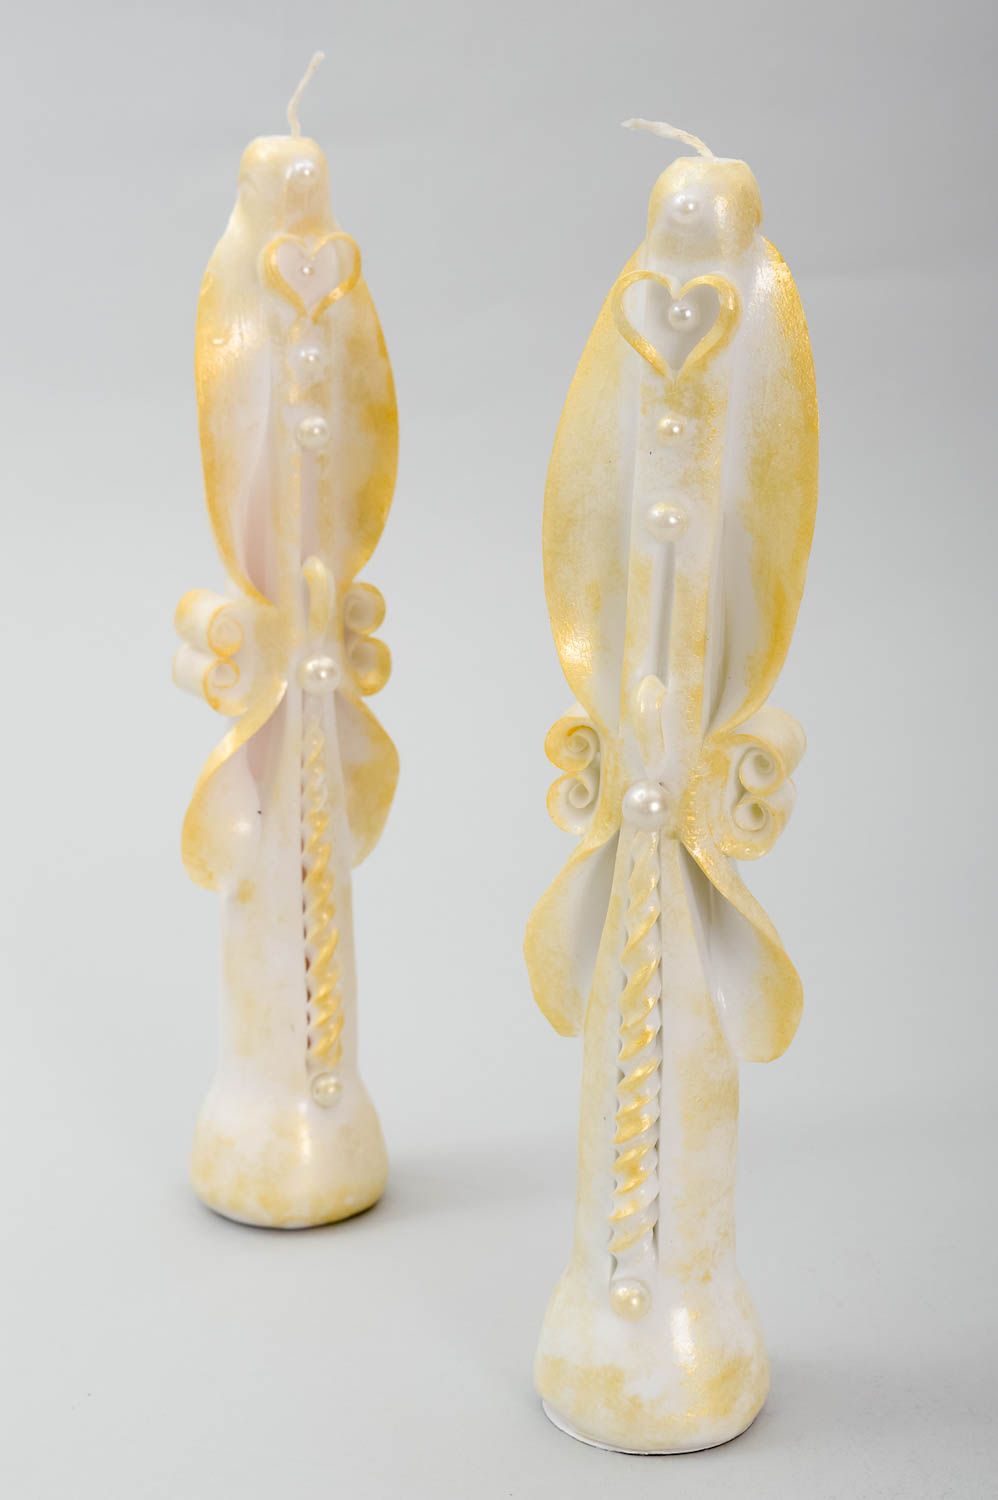 Deko Kerzen handmade Wachs Kerzen Hochzeit Accessoires Kerzen Geschenk weiß gelb foto 2